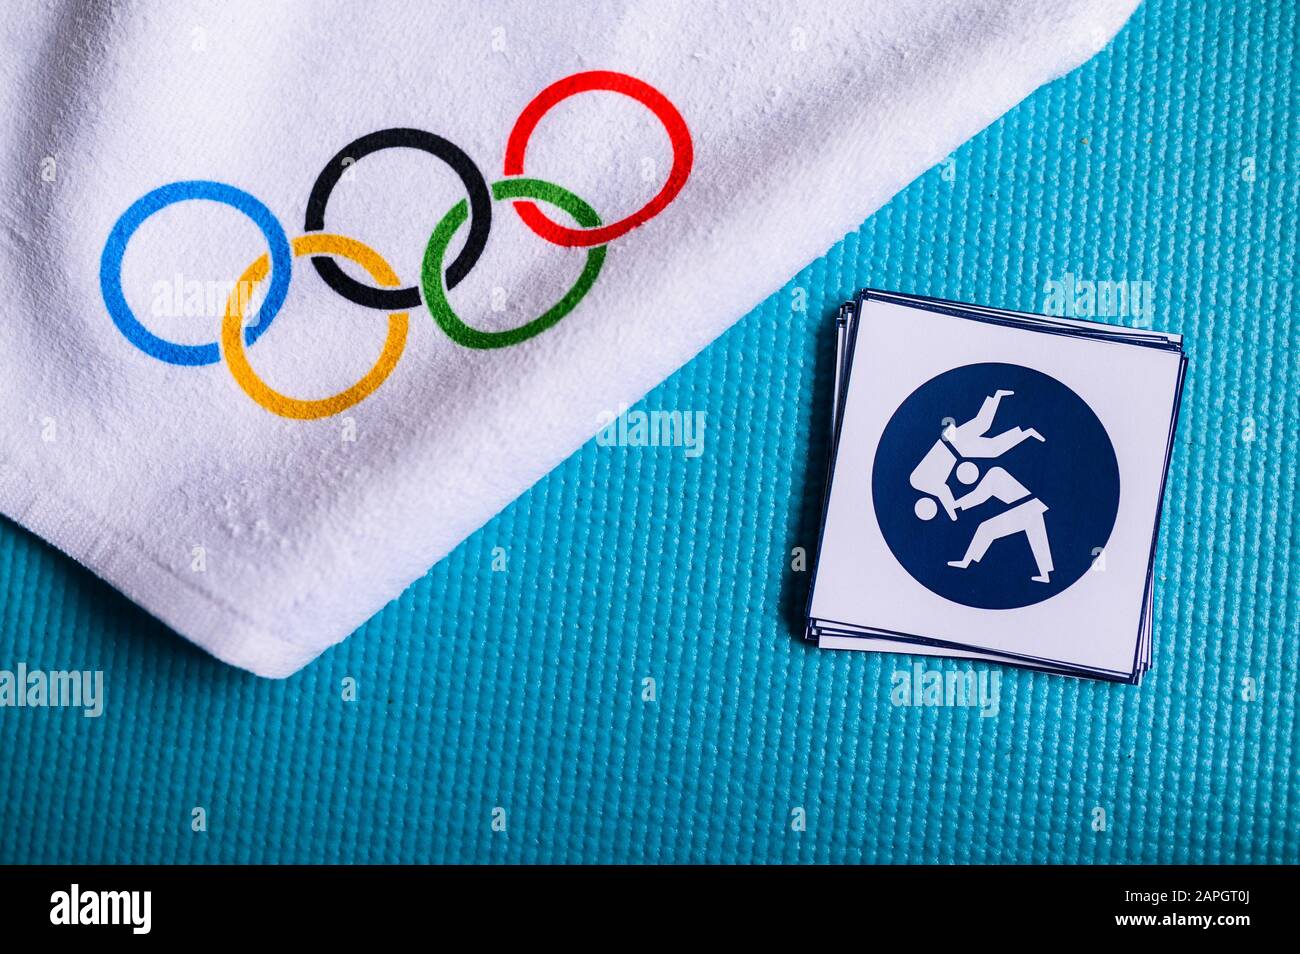 Tokyo Olympics 2020 Olympic Sports Pictogram Judo Key Holder Ring JAPAN 